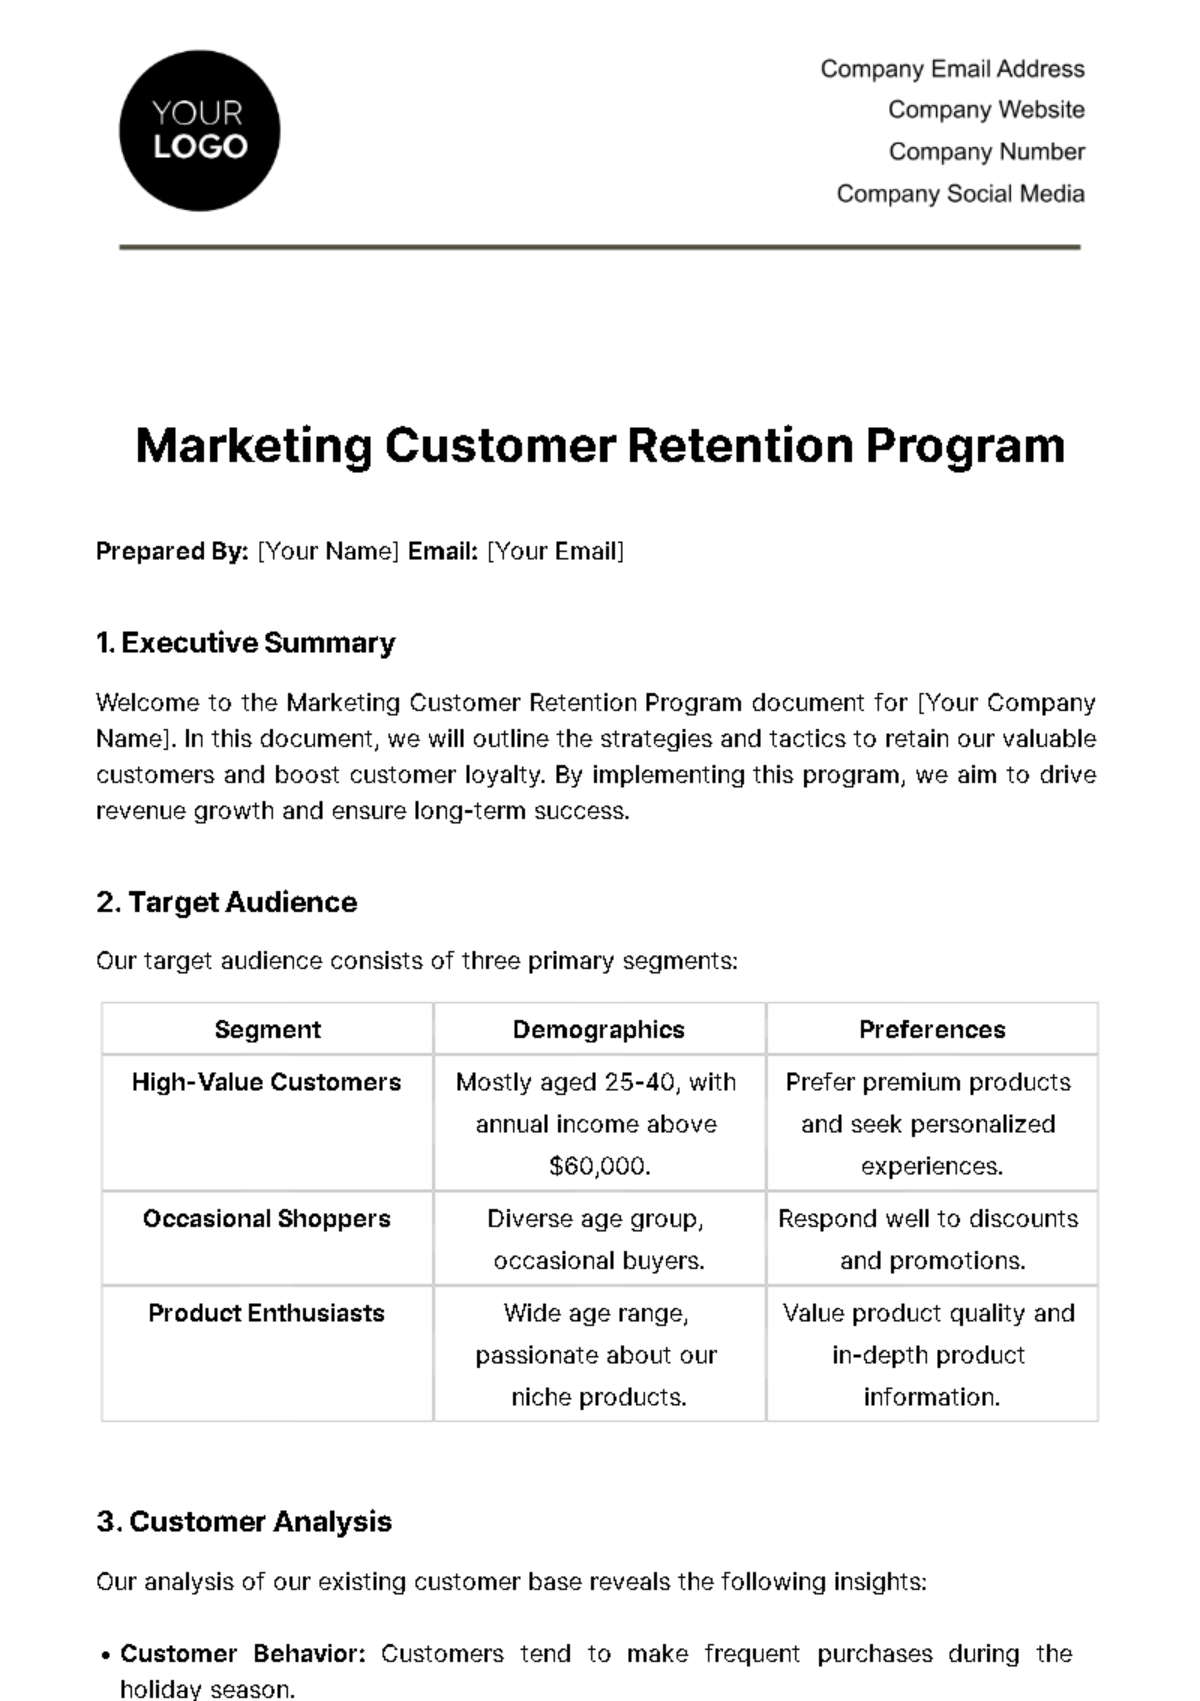 Marketing Customer Retention Program Template